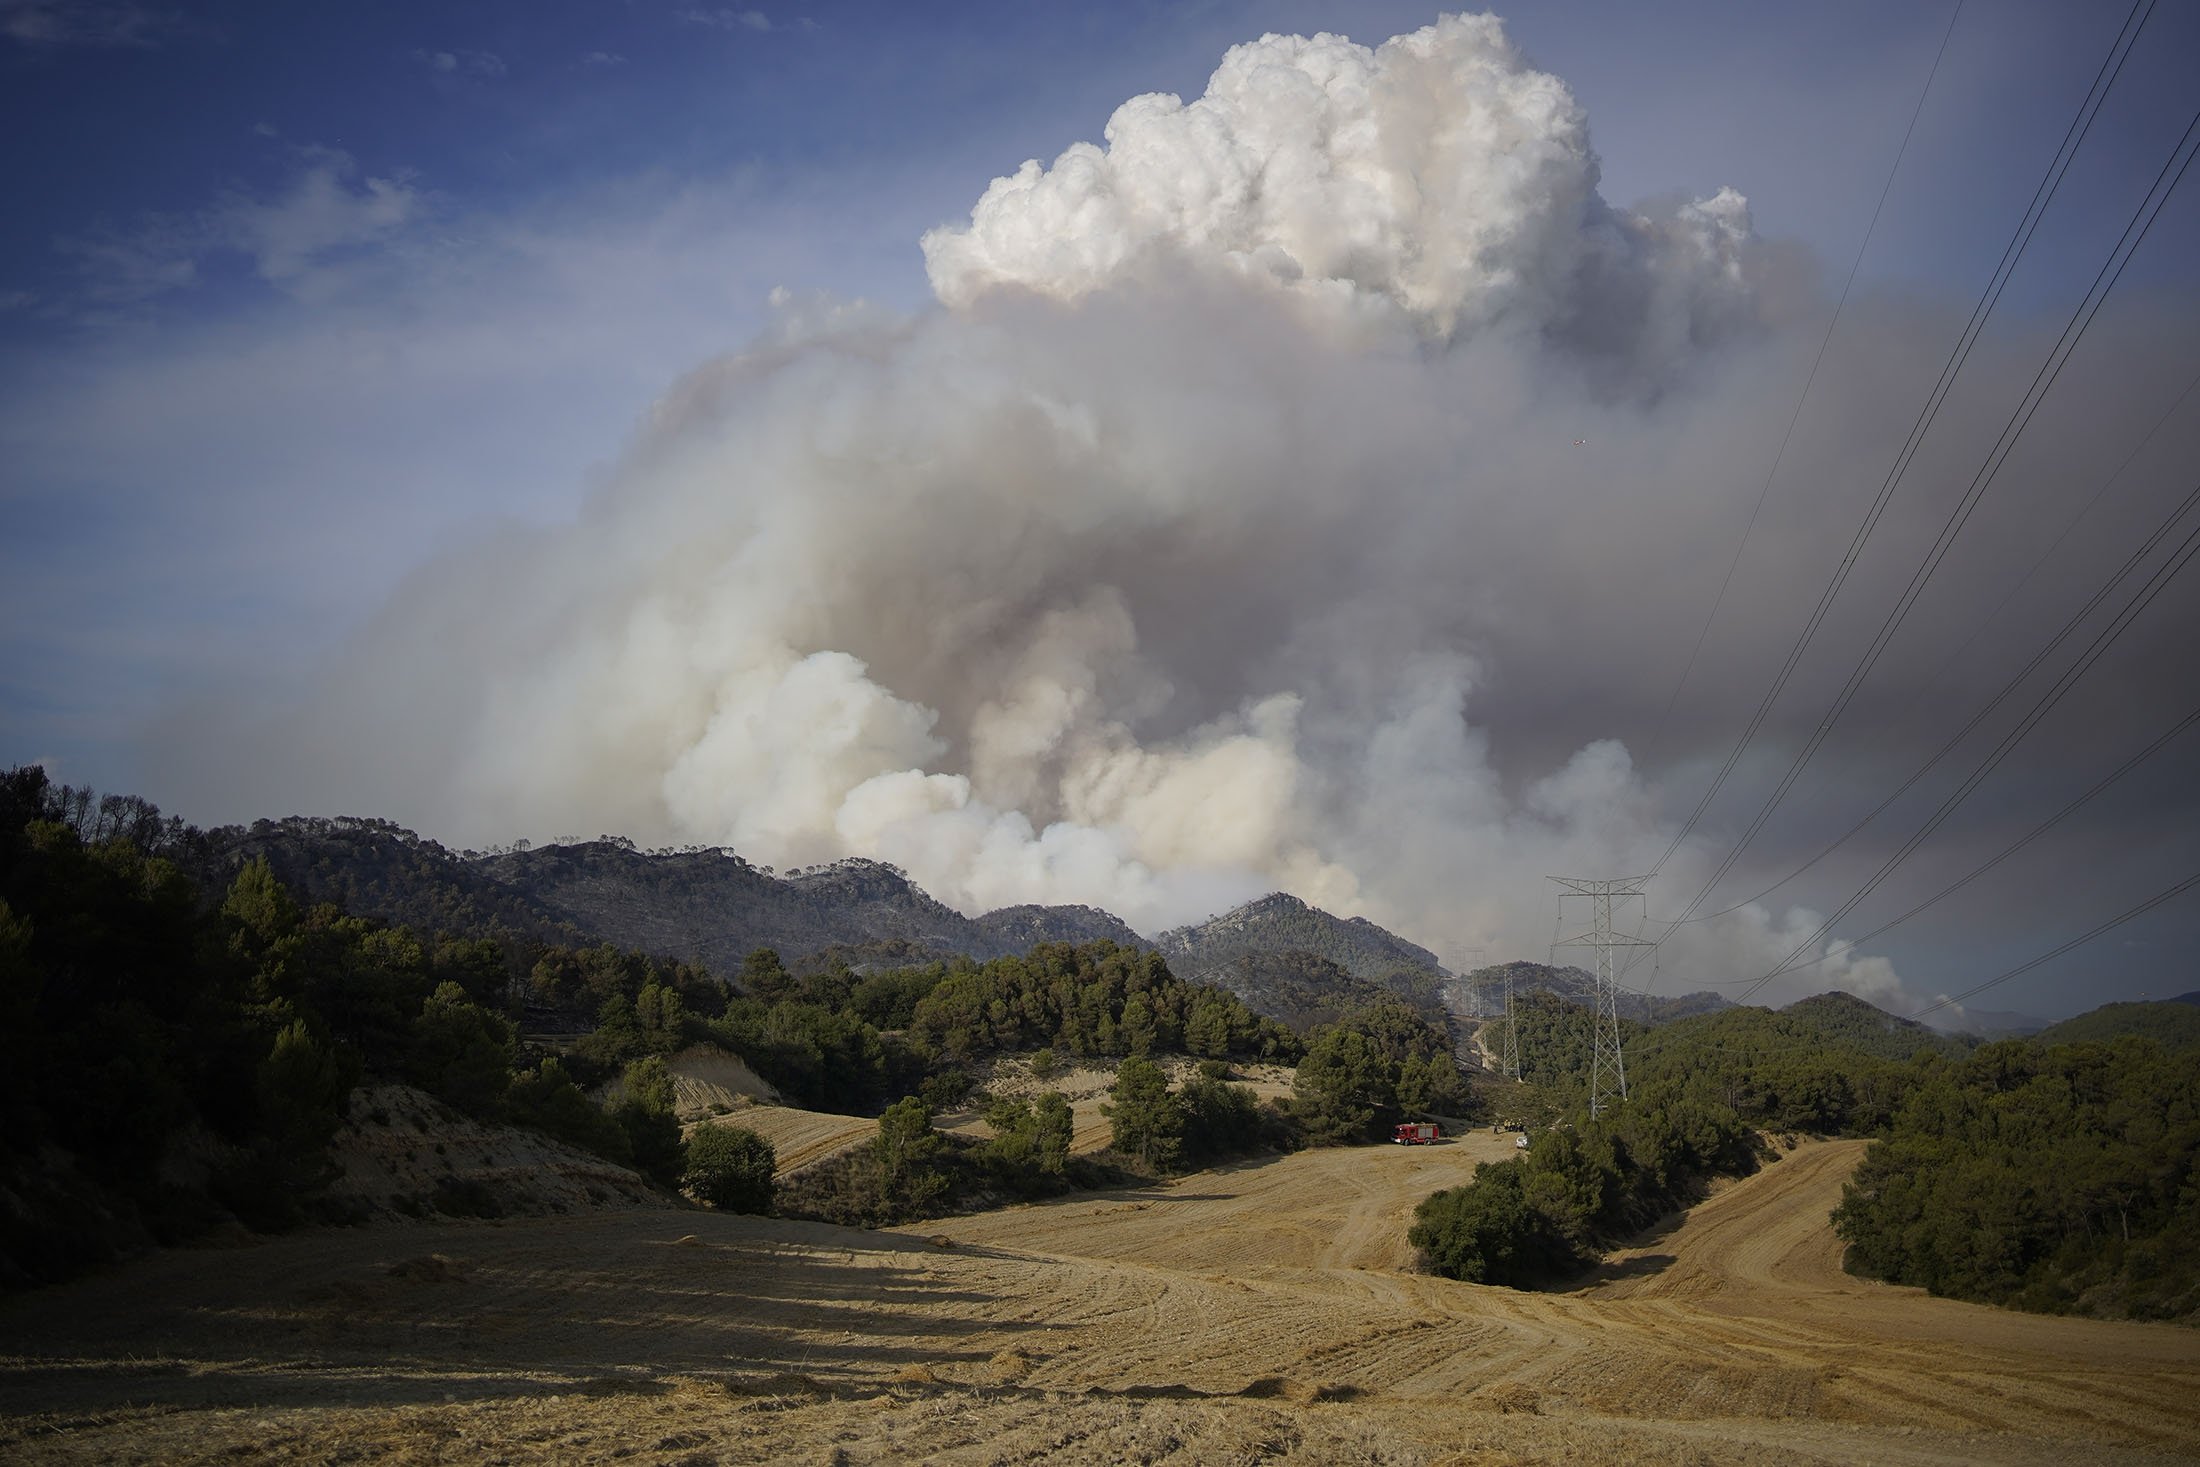 A wildfire burns trees in Santa Coloma de Queralt, near Tarragona, Spain, July 25, 2021. (AP Photo)